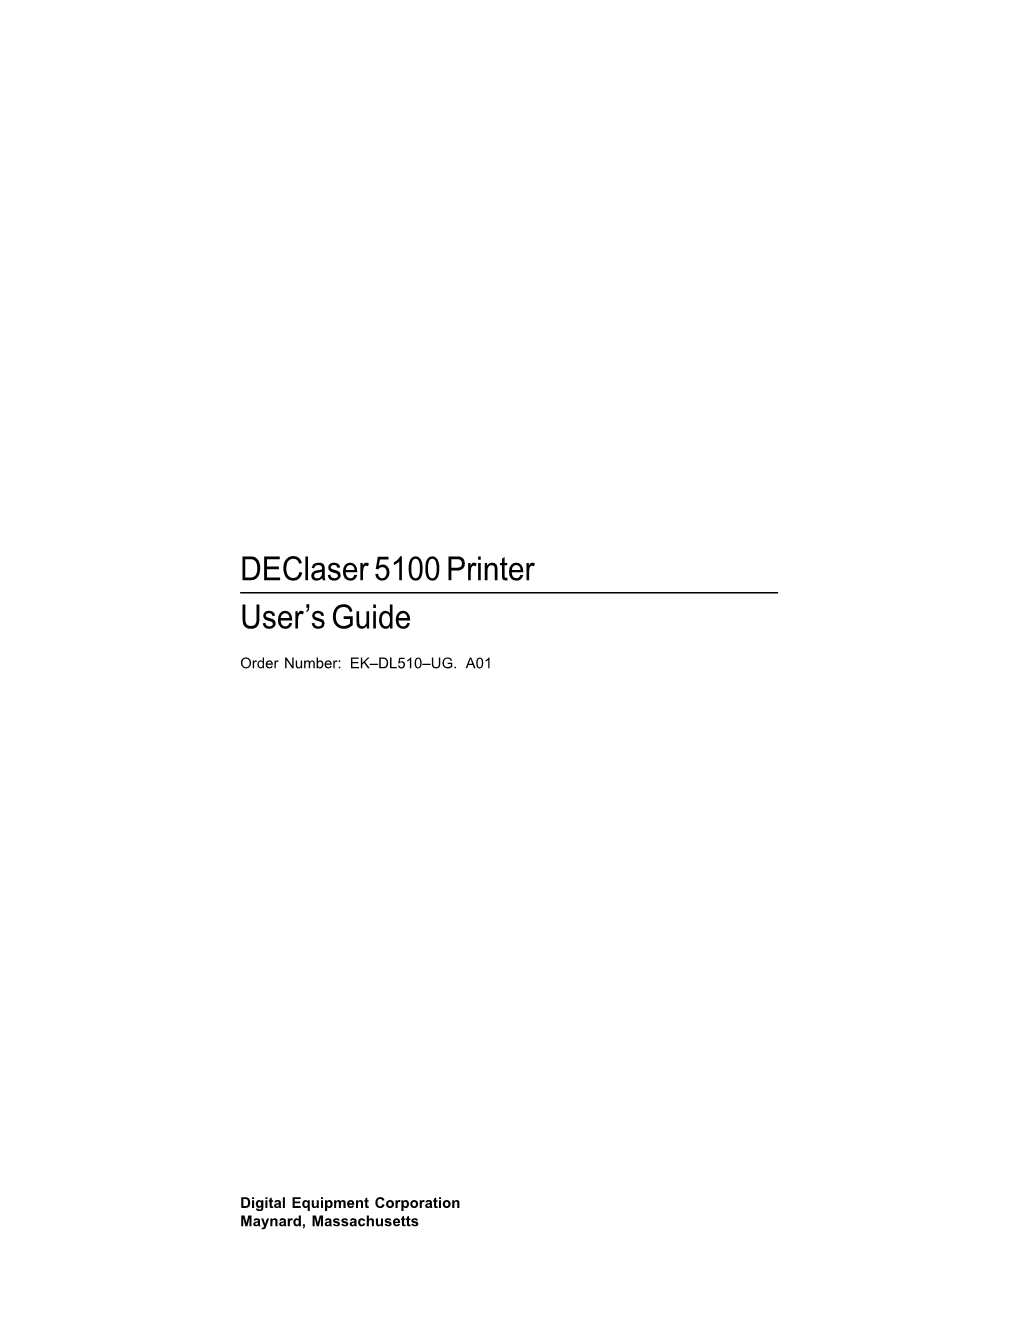 Declaser 5100 Printer User's Guide